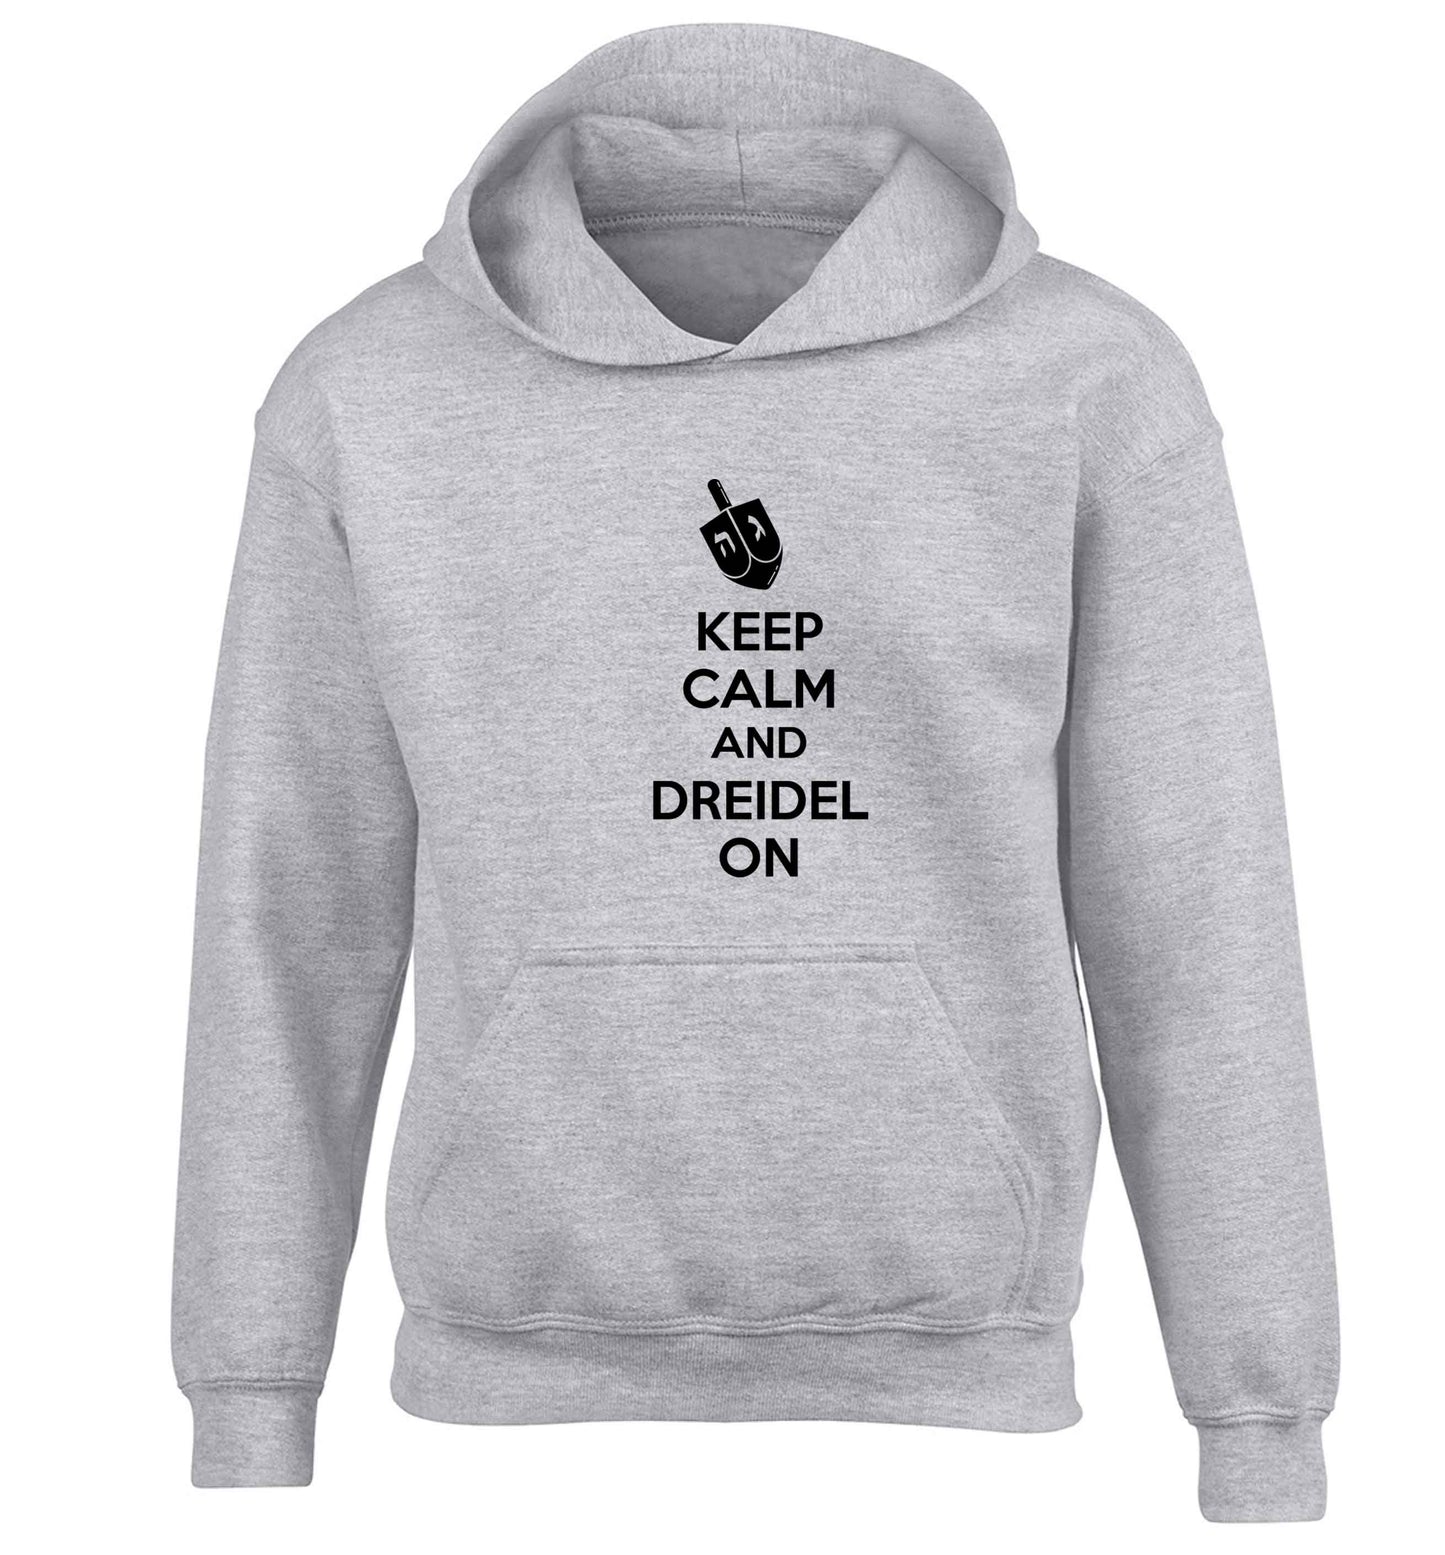 Keep calm and dreidel on children's grey hoodie 12-13 Years